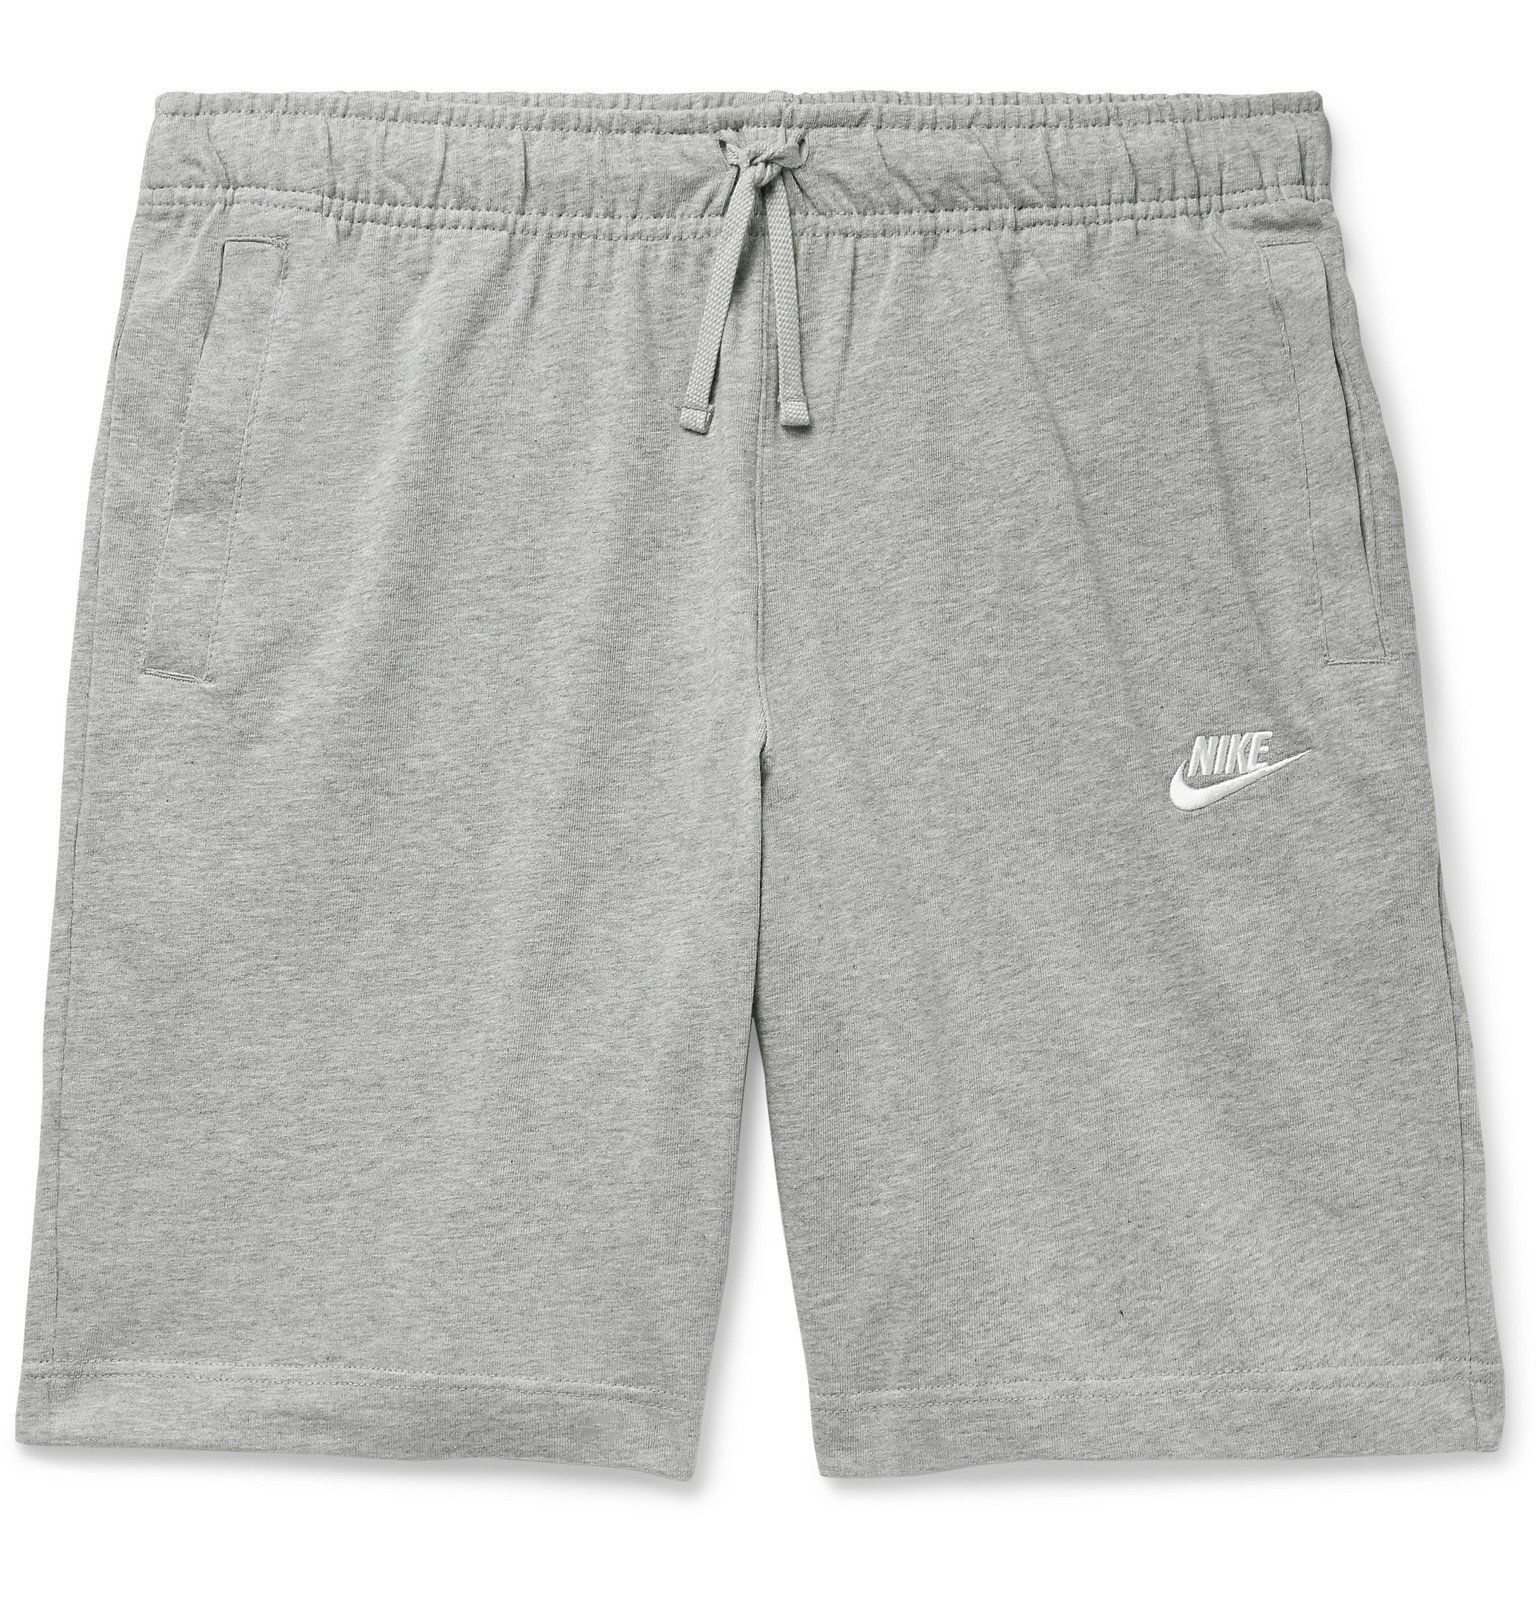 grey cotton shorts nike